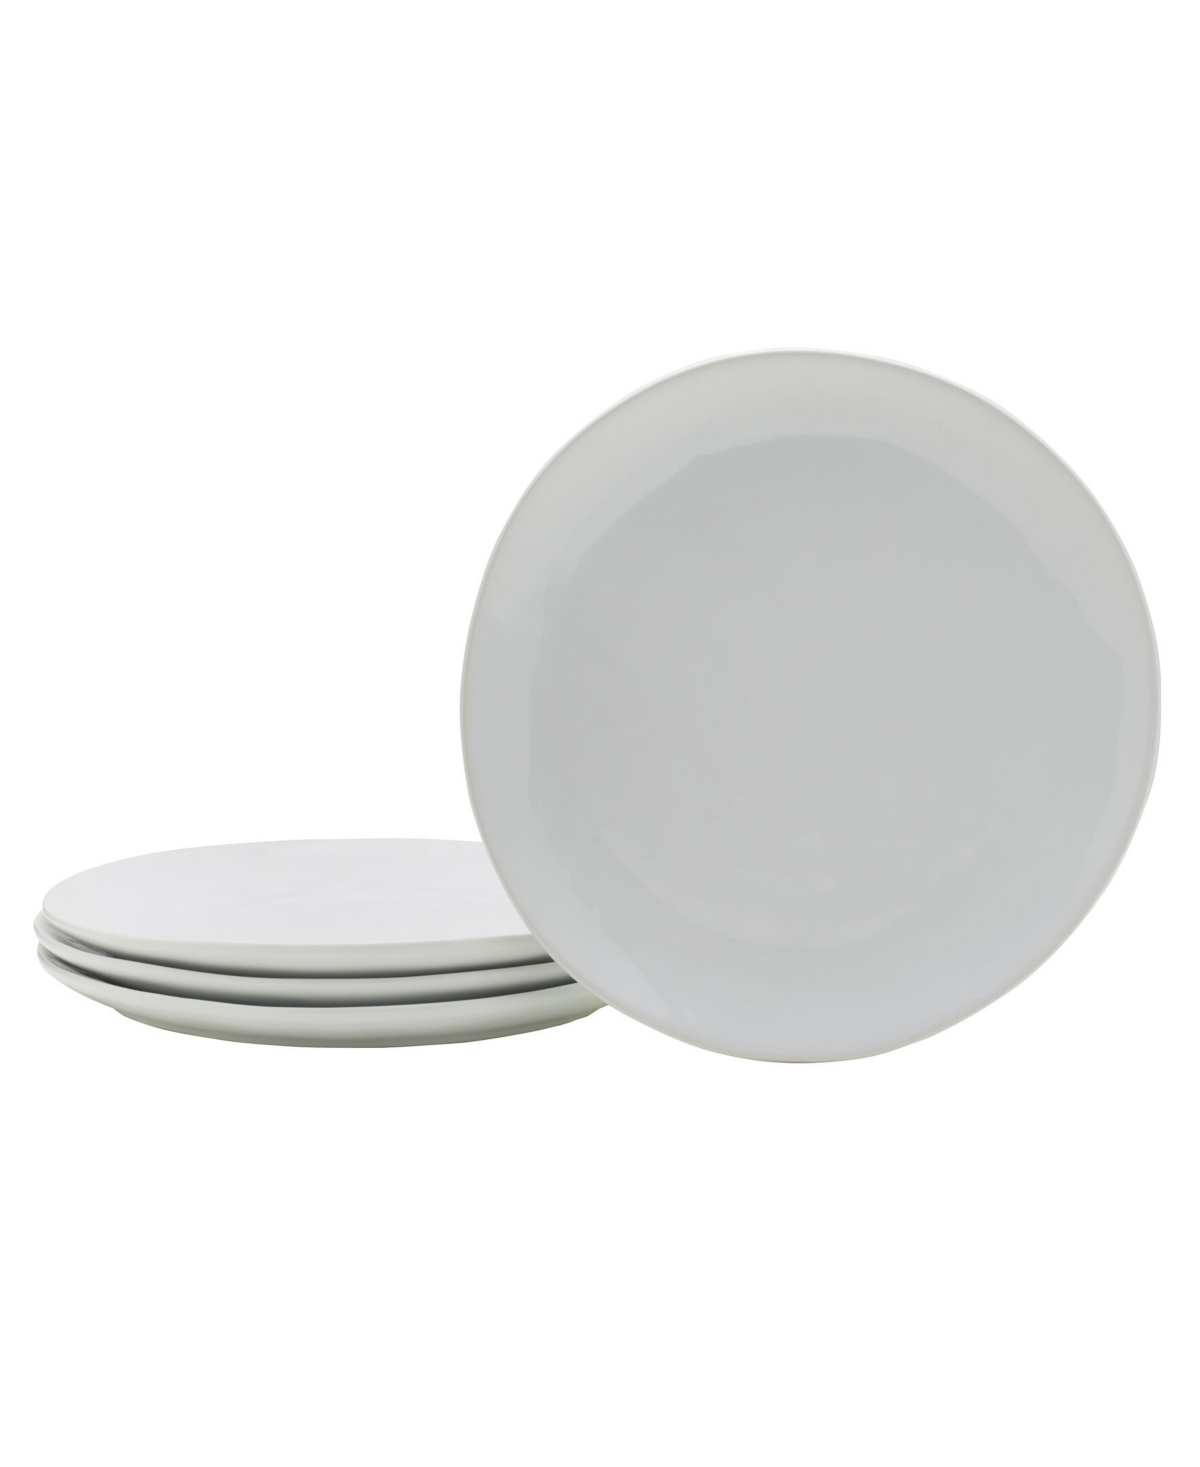 Everyday Whiteware Salad Plate 4 Piece Set - White